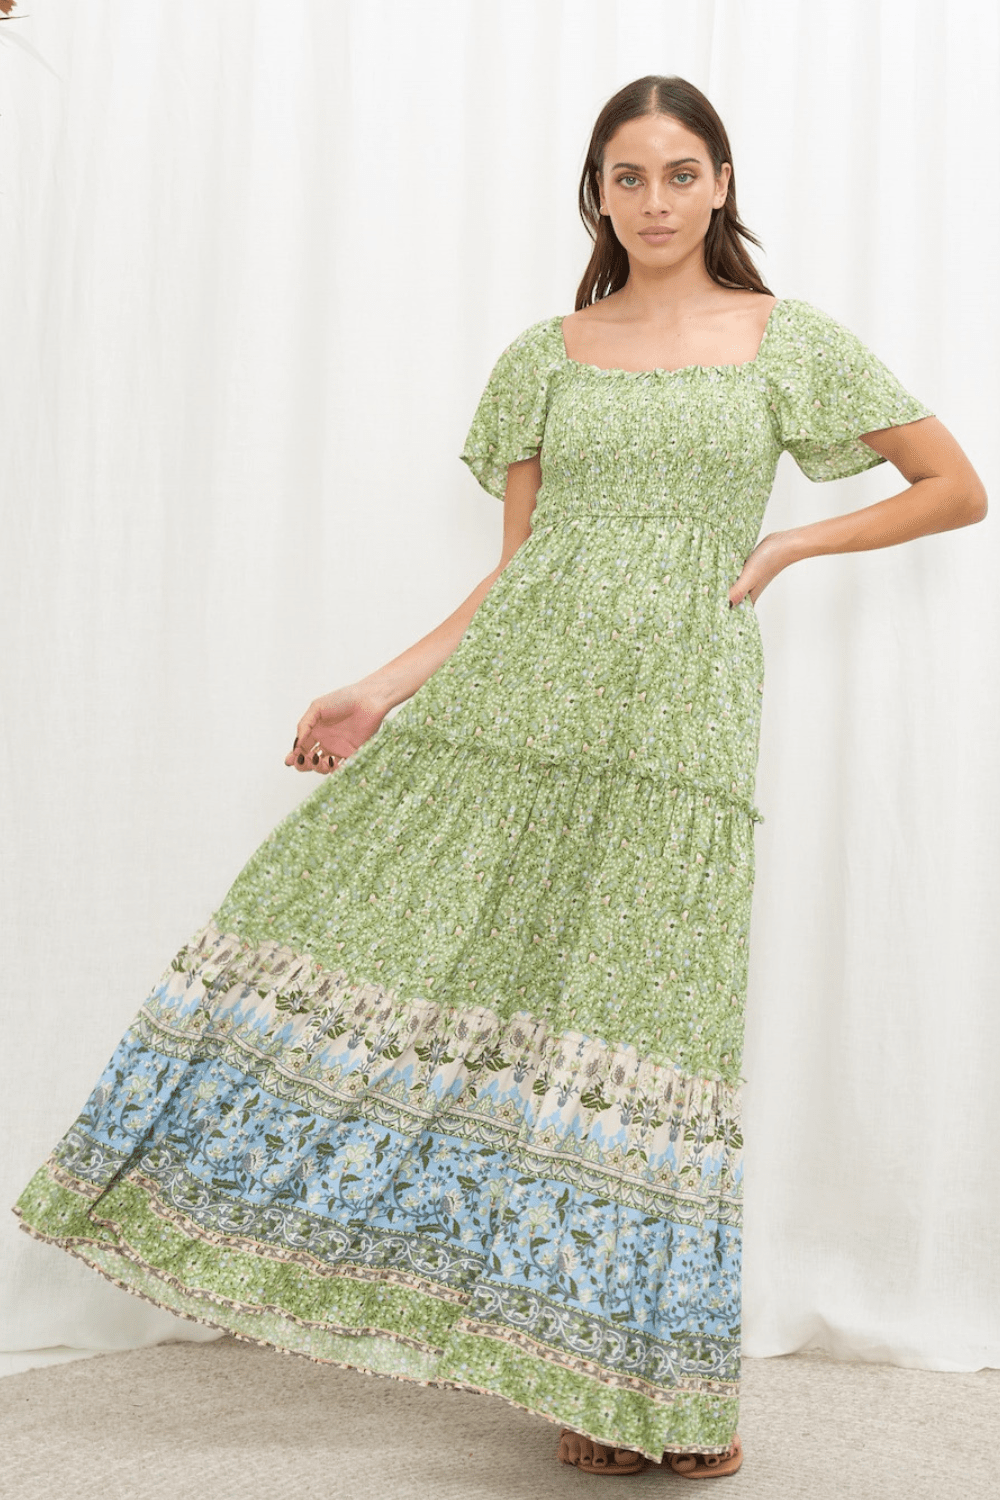 Josie Maxi Dress - Green Floral